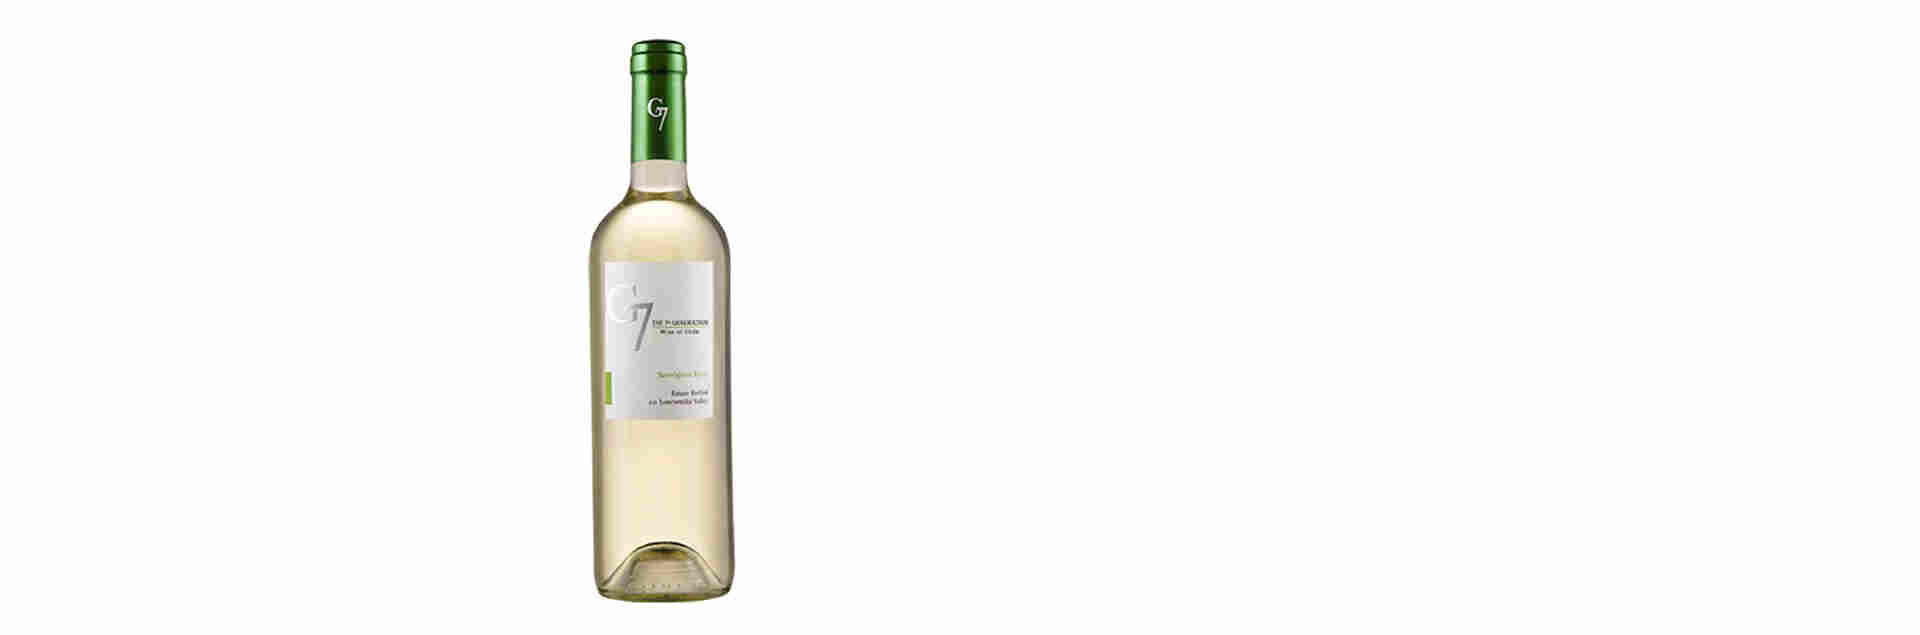 Rượu Vang Chile G7 Clasico trắng